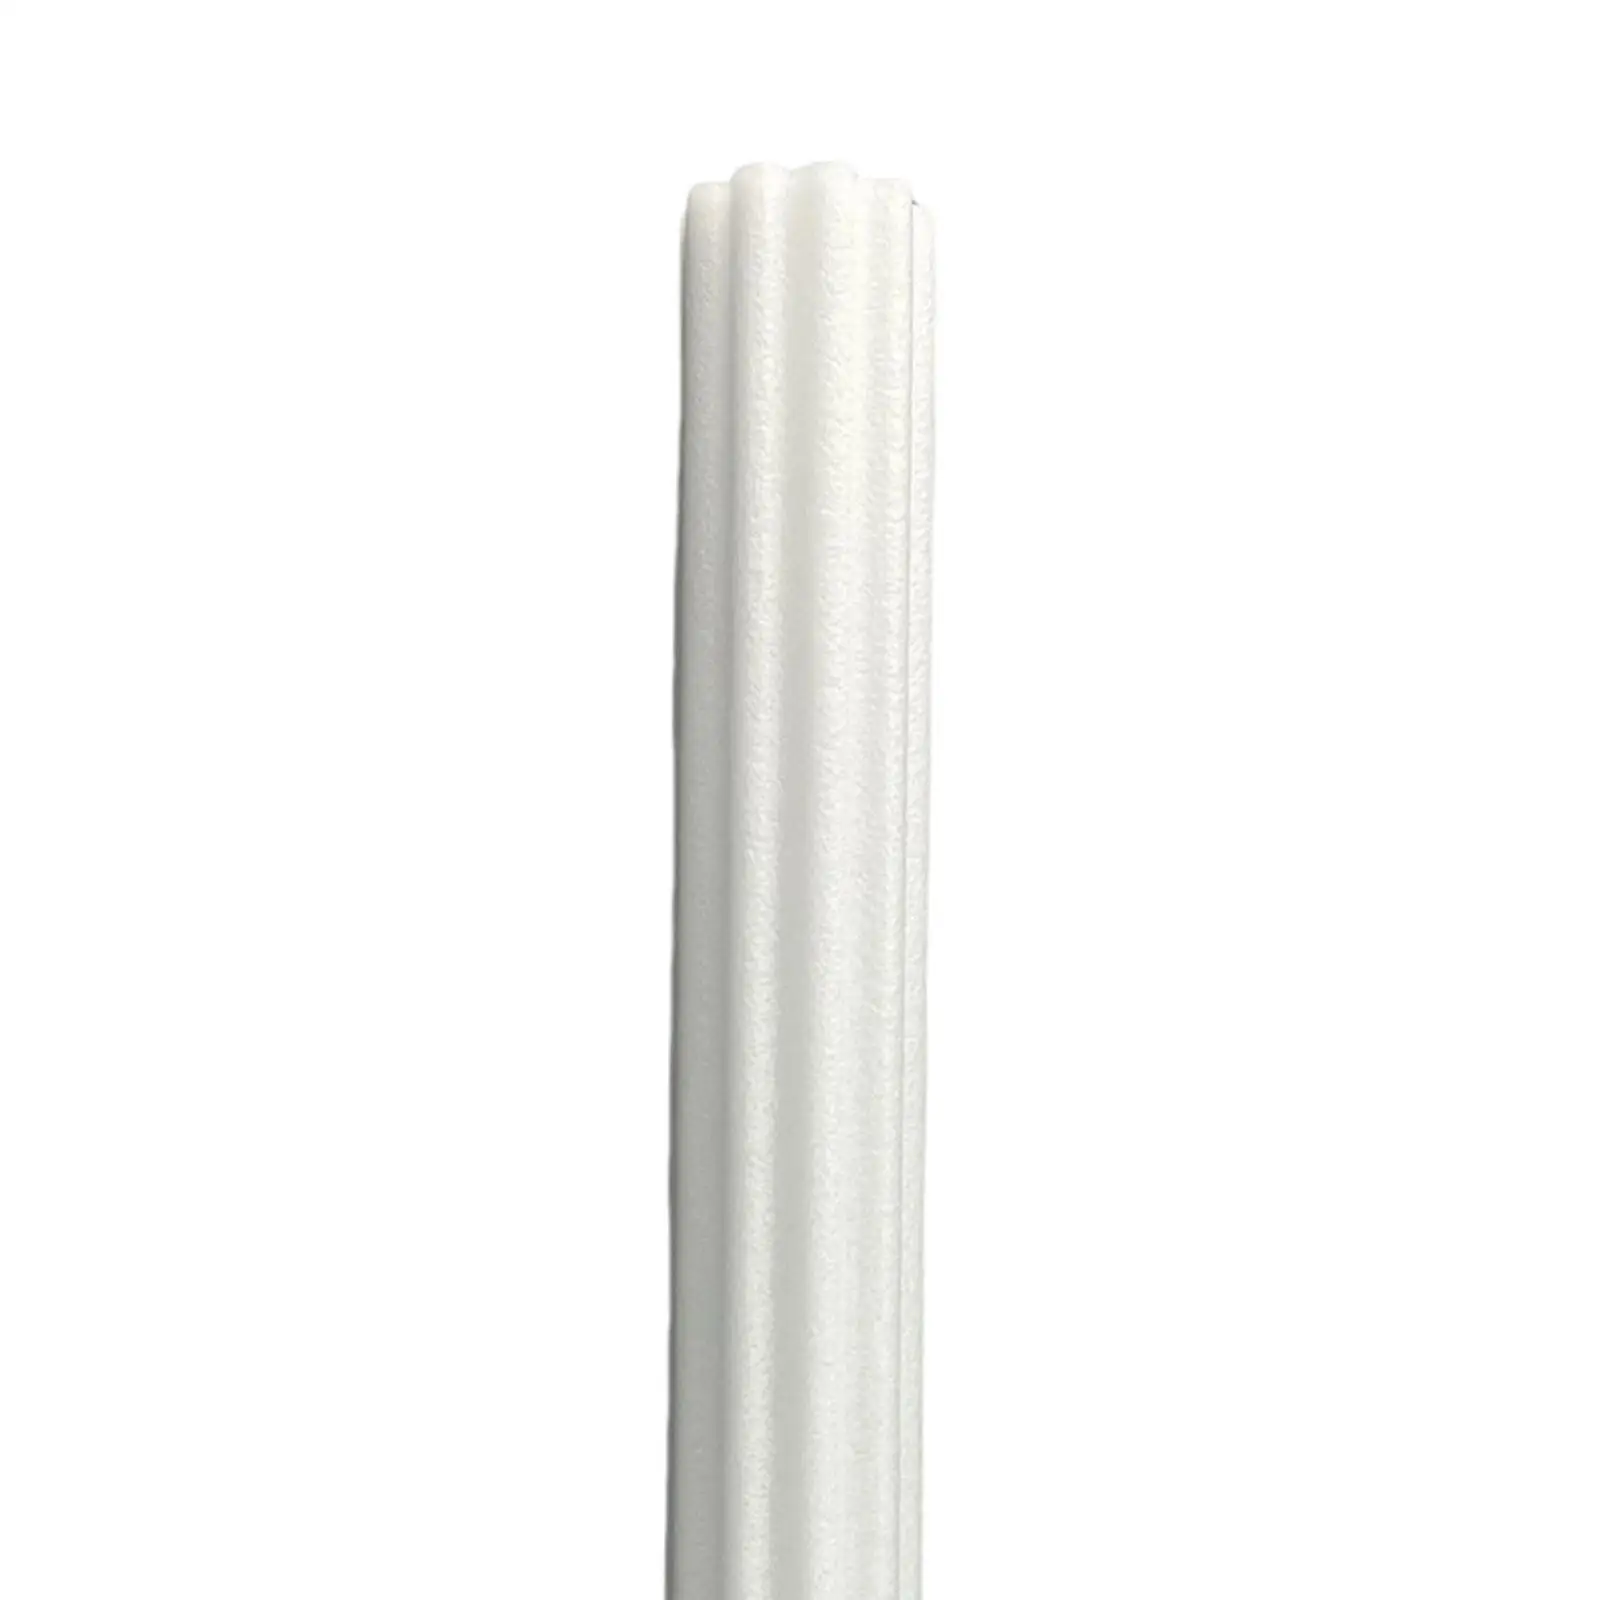 Trampoline Enclosure Pole Foam Sleeve for Tube Kids Trampoline Accessories